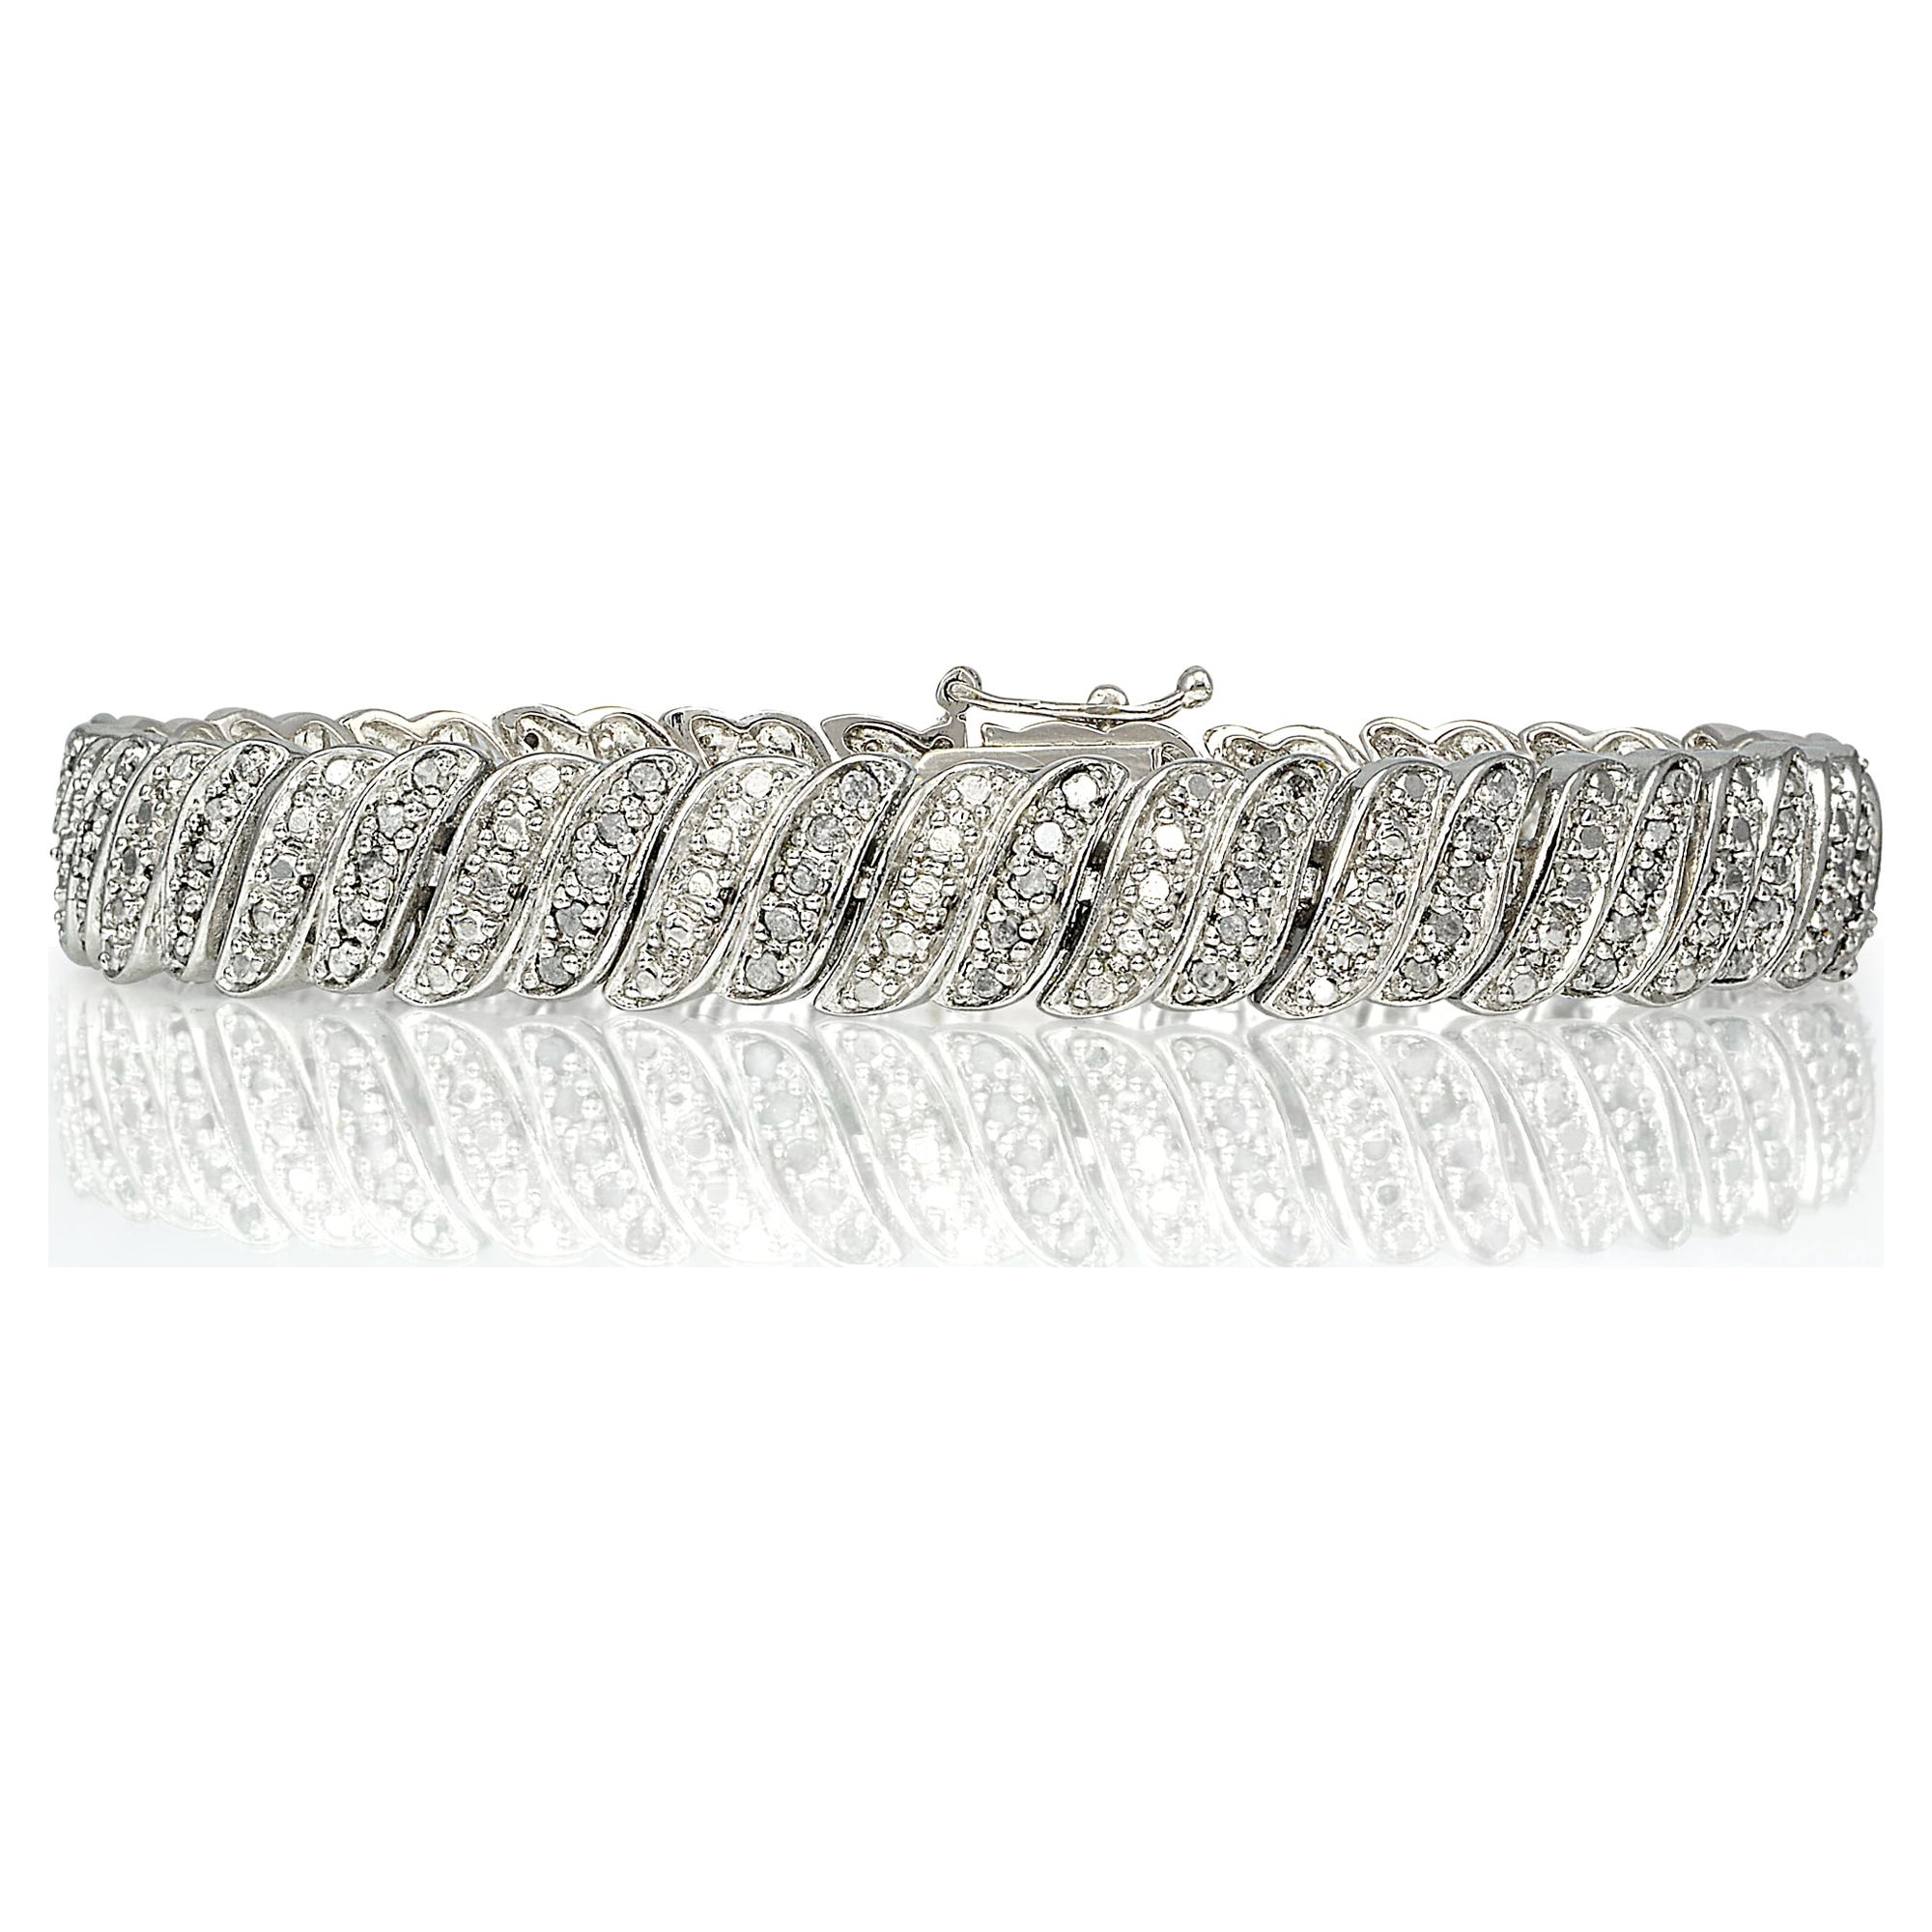 1 Carat Diamond Silver-Tone Wave Link Tennis Bracelet - image 1 of 4